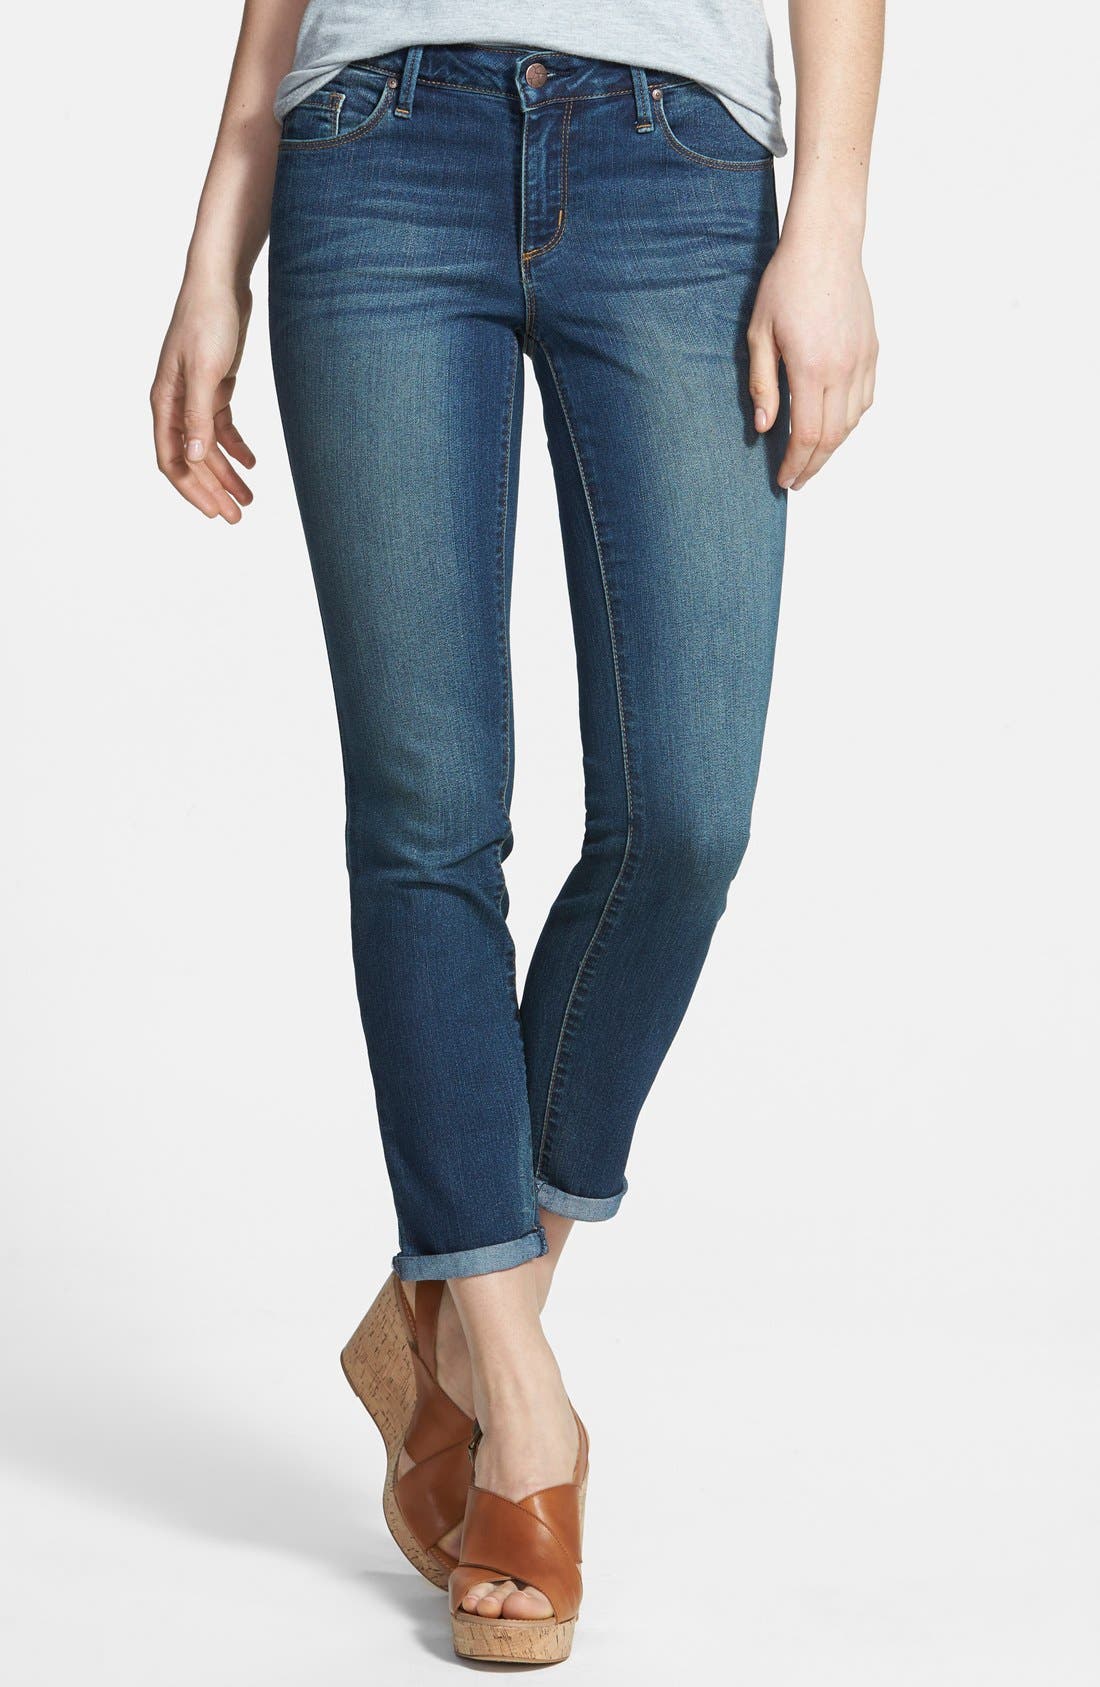 jessica simpson skinny crop jeans